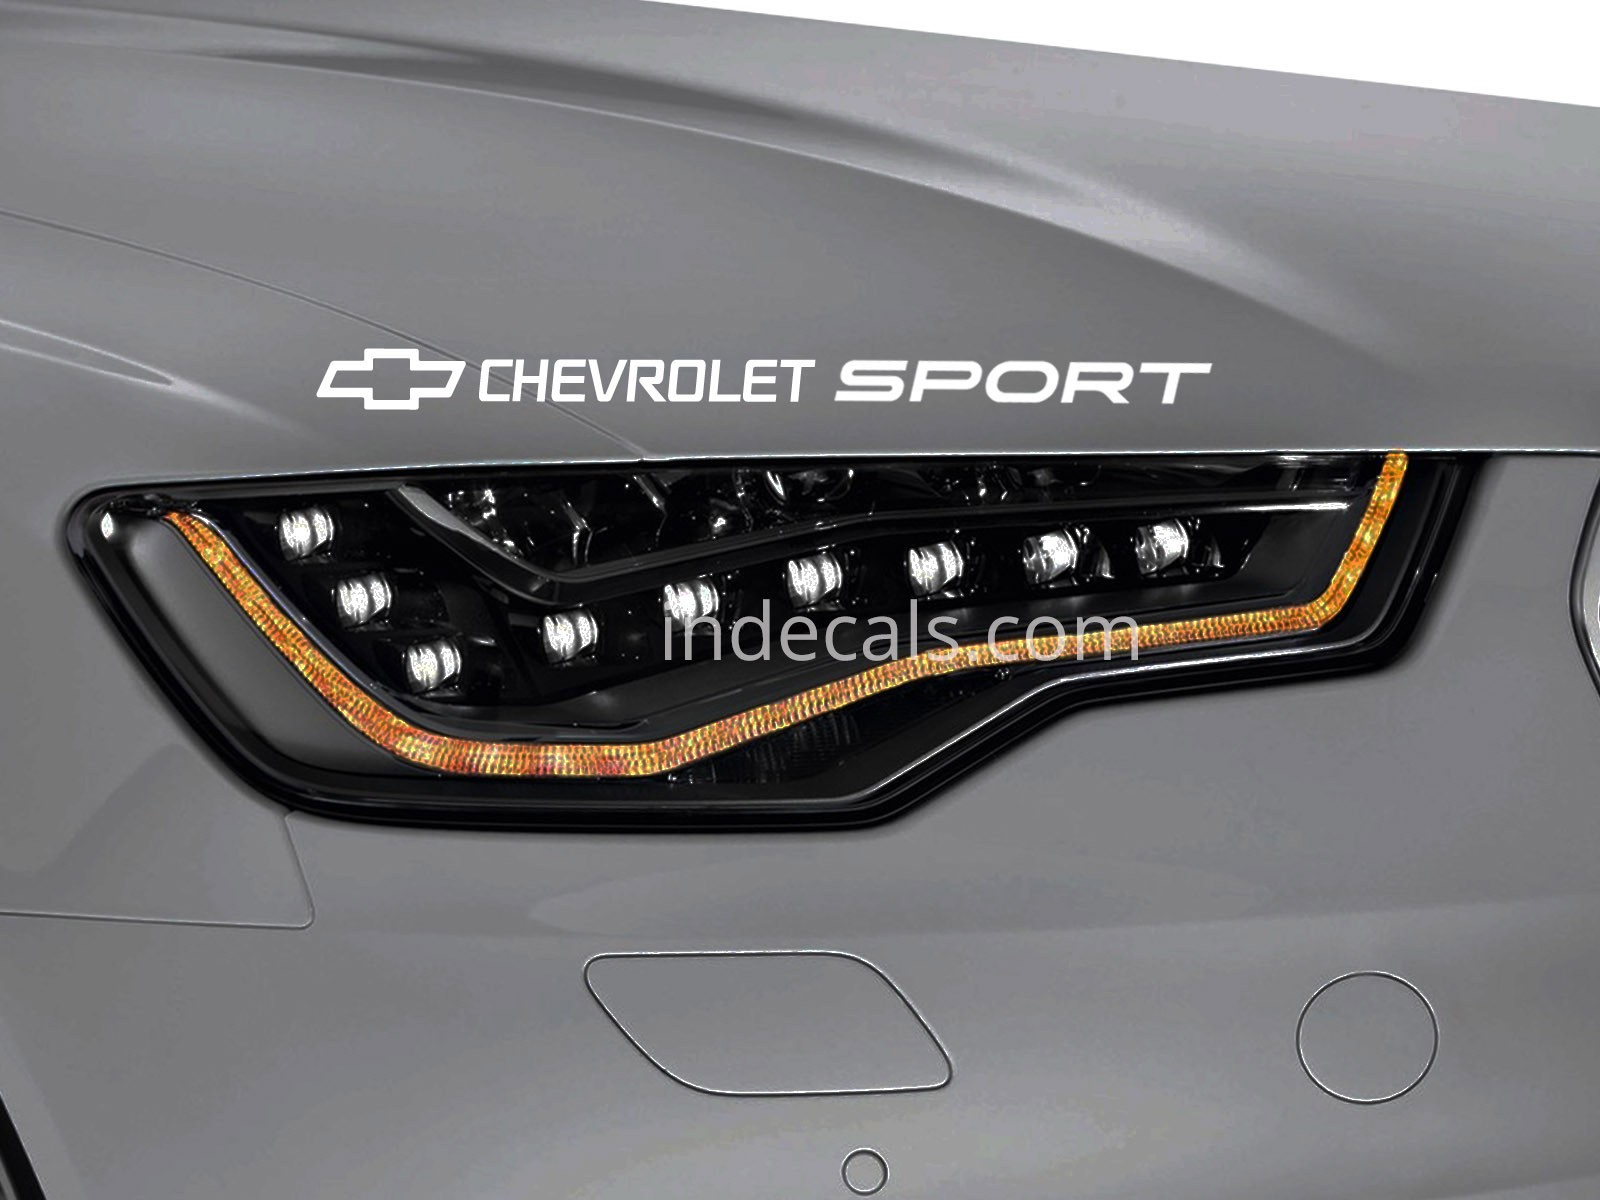 1 x Chevrolet Sport Sticker for Eyebrow - White